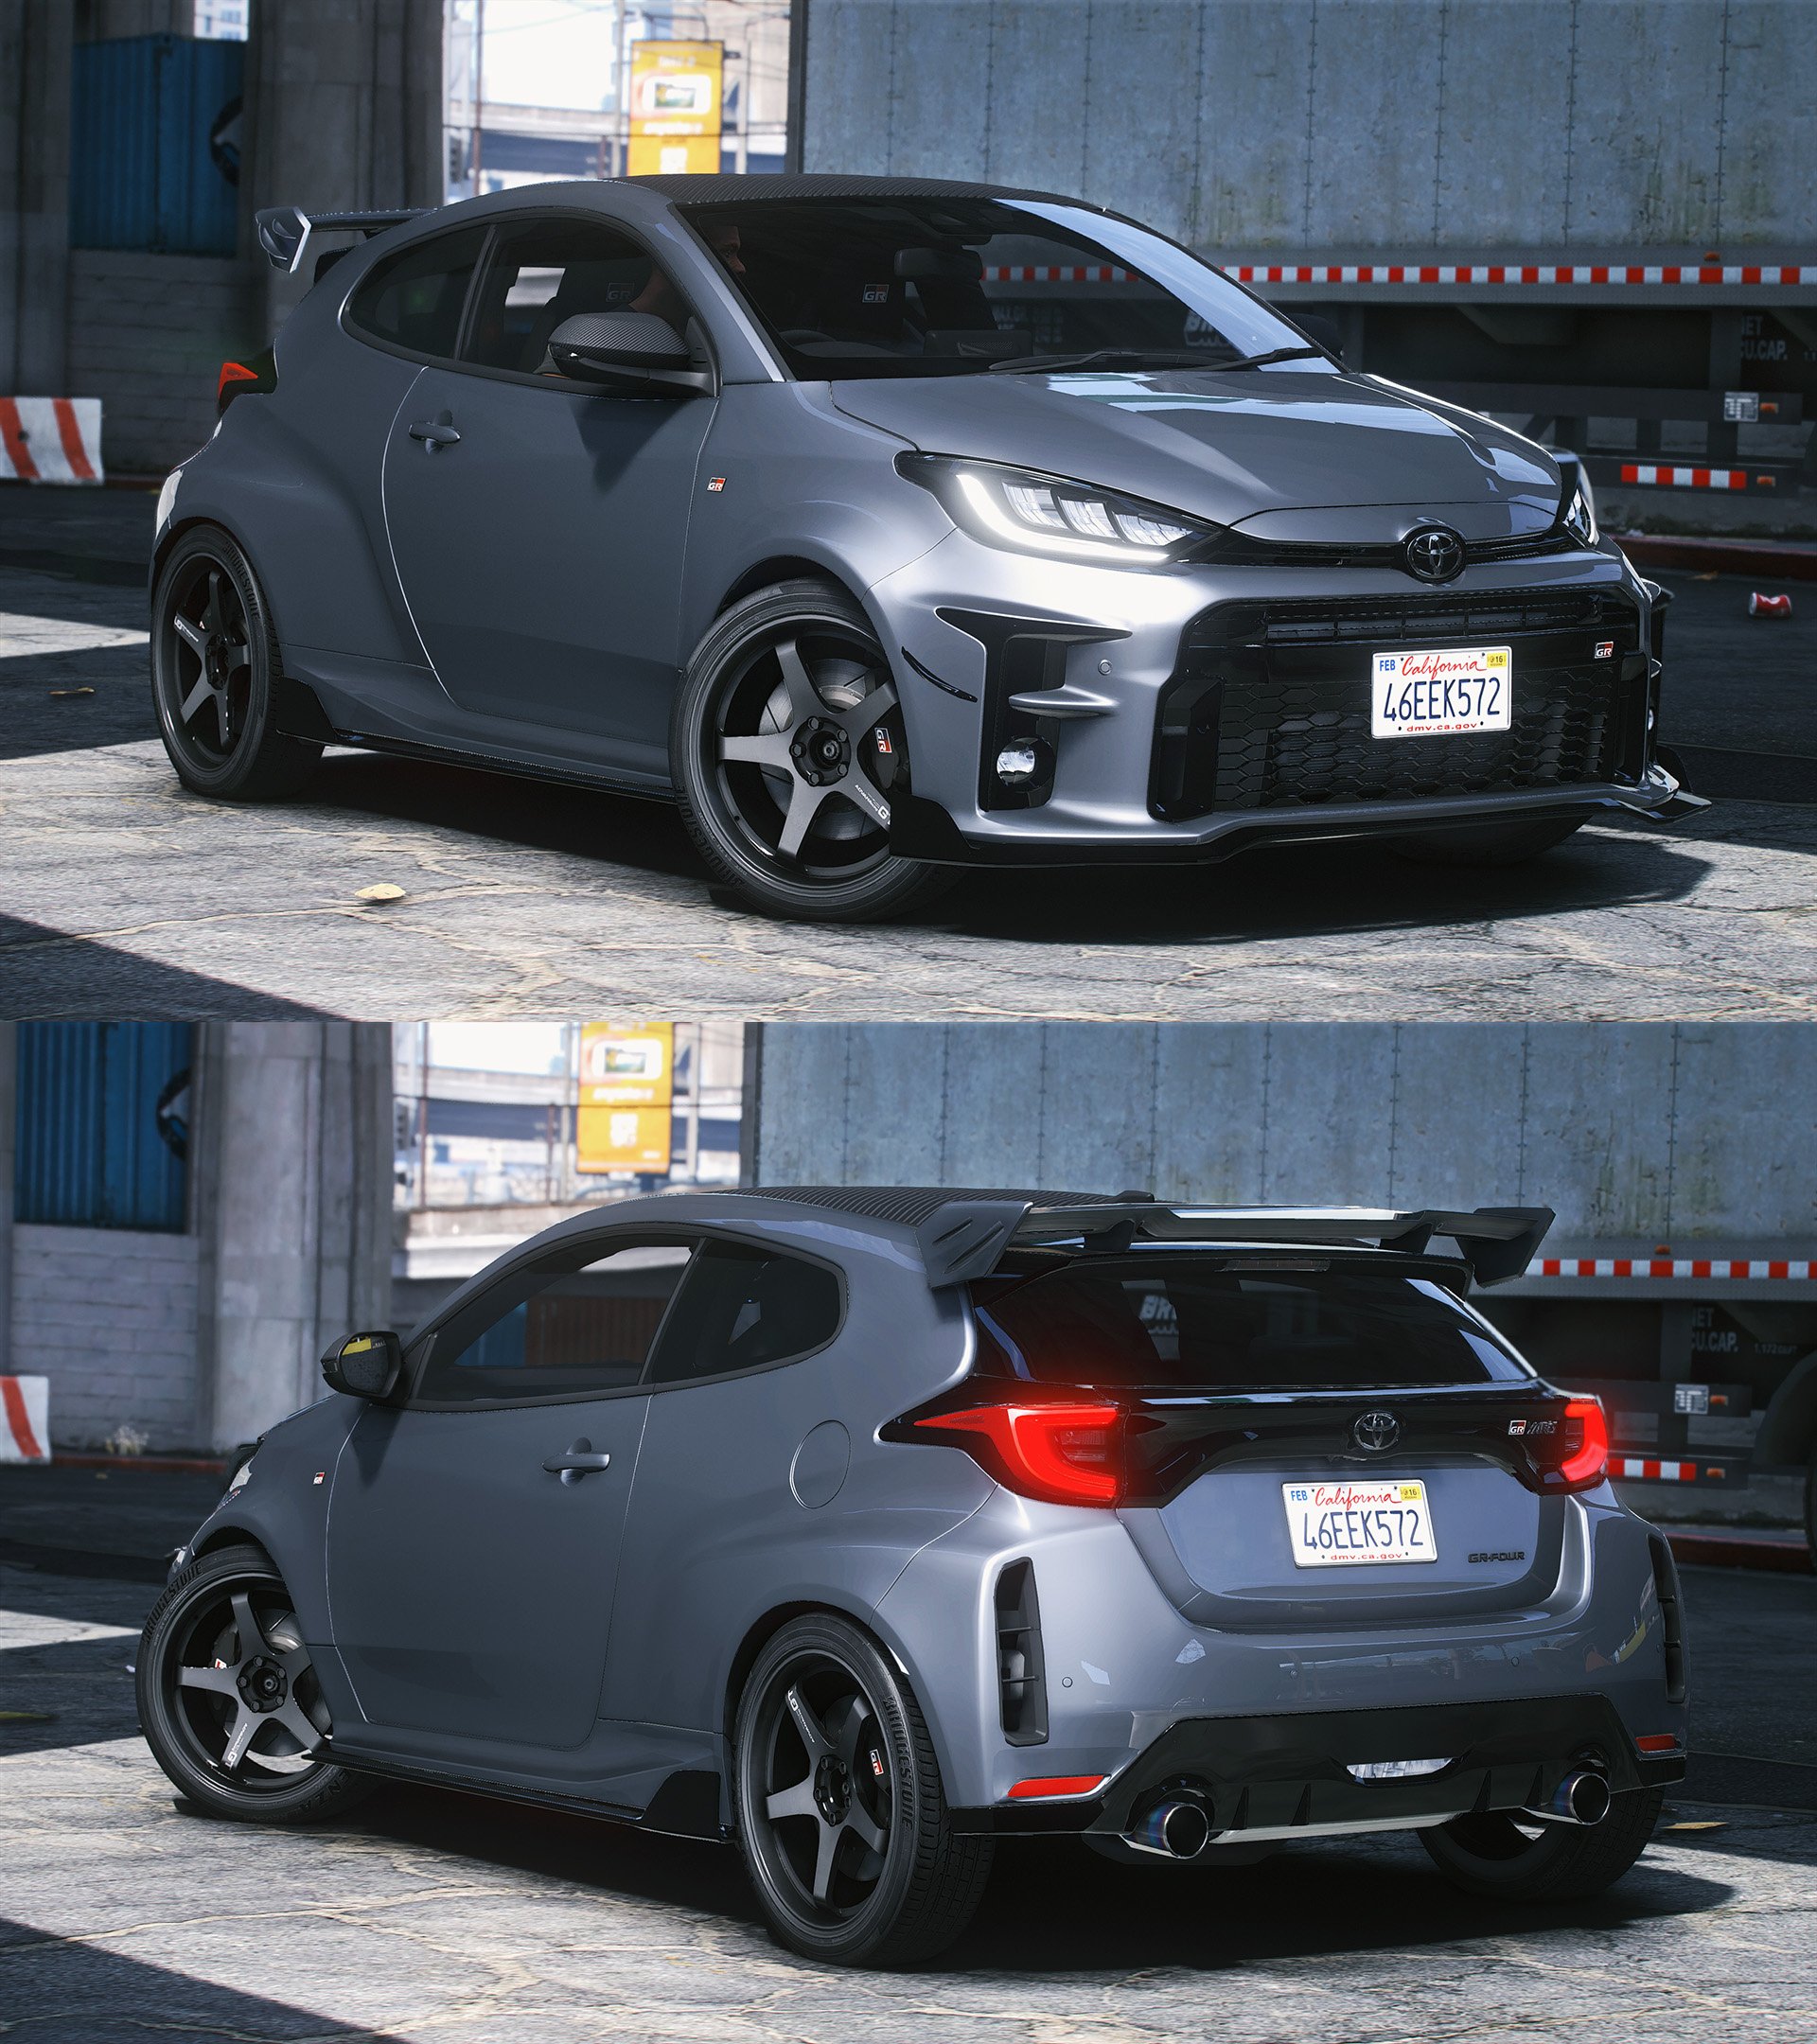 Toyota GR Yaris (XP210 - 2020 >), Opron